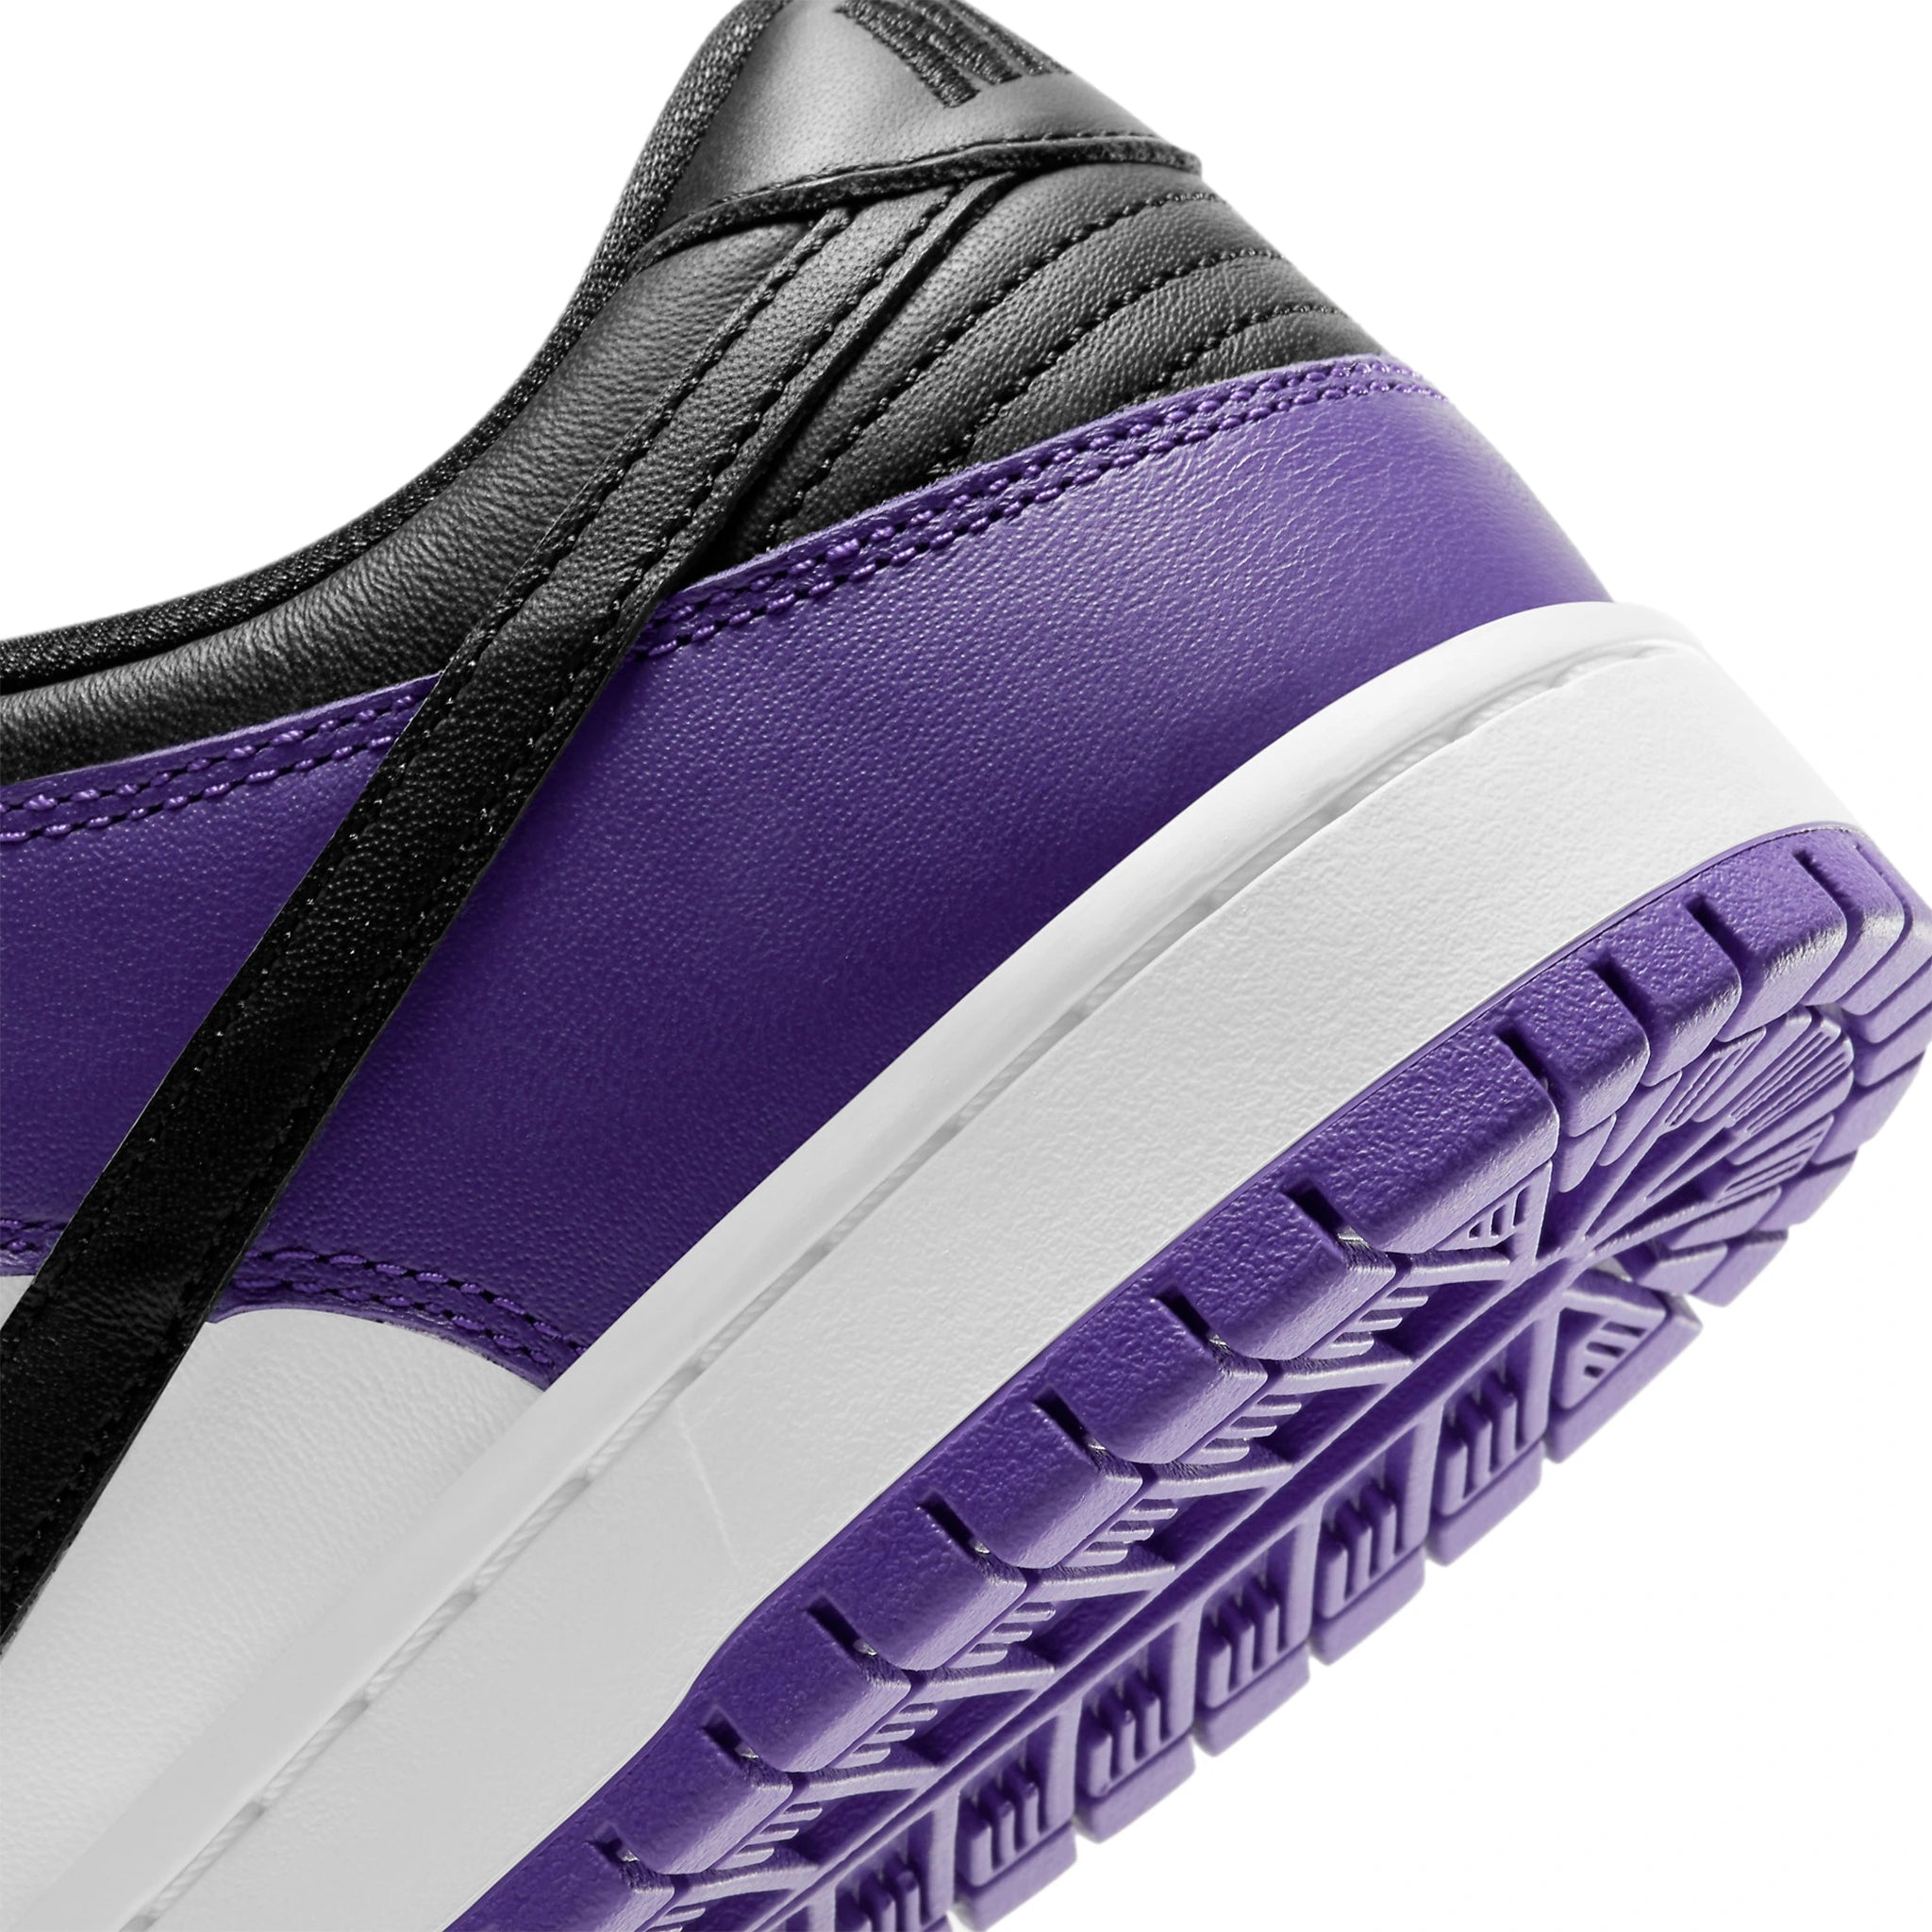 Heel view of Nike SB Dunk Low Court Purple BQ6817-500